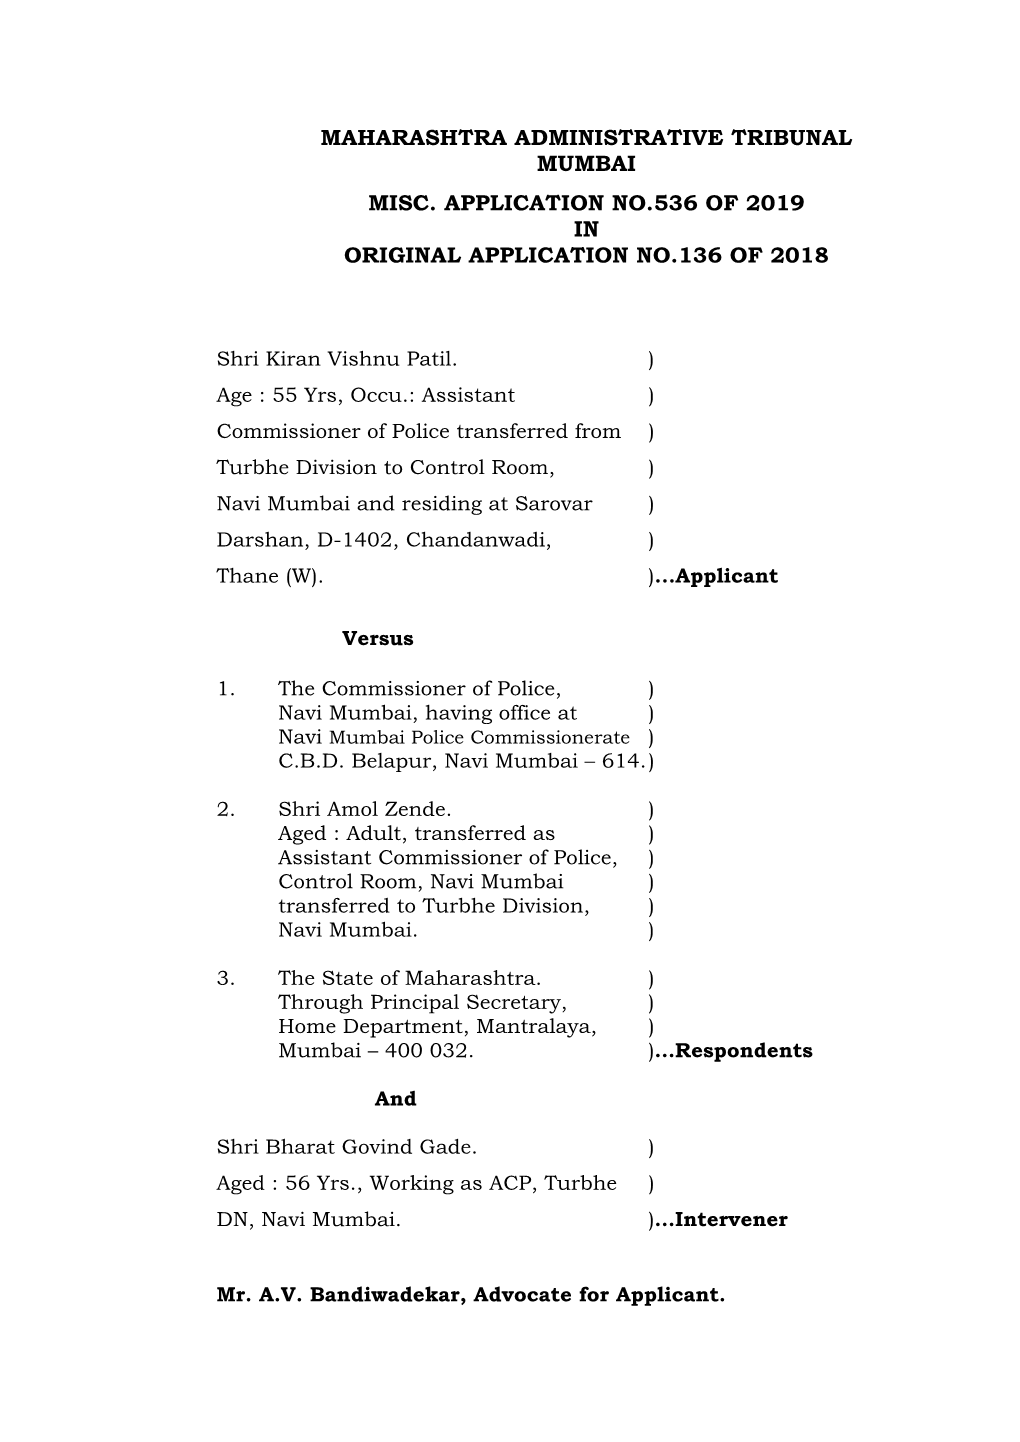 Maharashtra Administrative Tribunal Mumbai Misc. Application No.536 of 2019 in Original Application No.136 of 2018